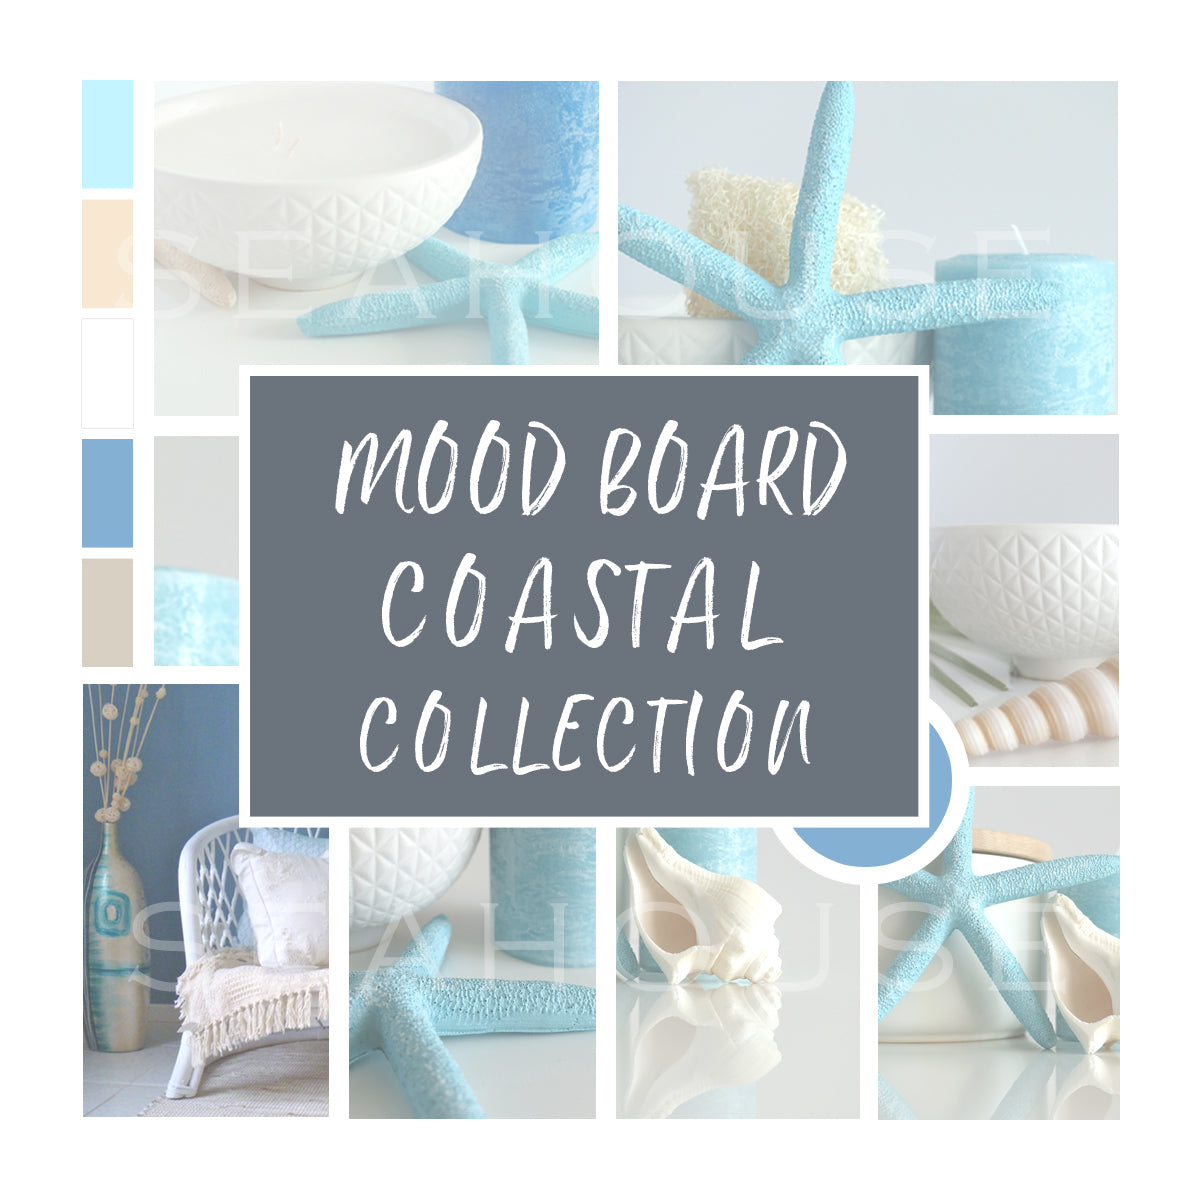 WM Mood Board Coastal Collection for Blog